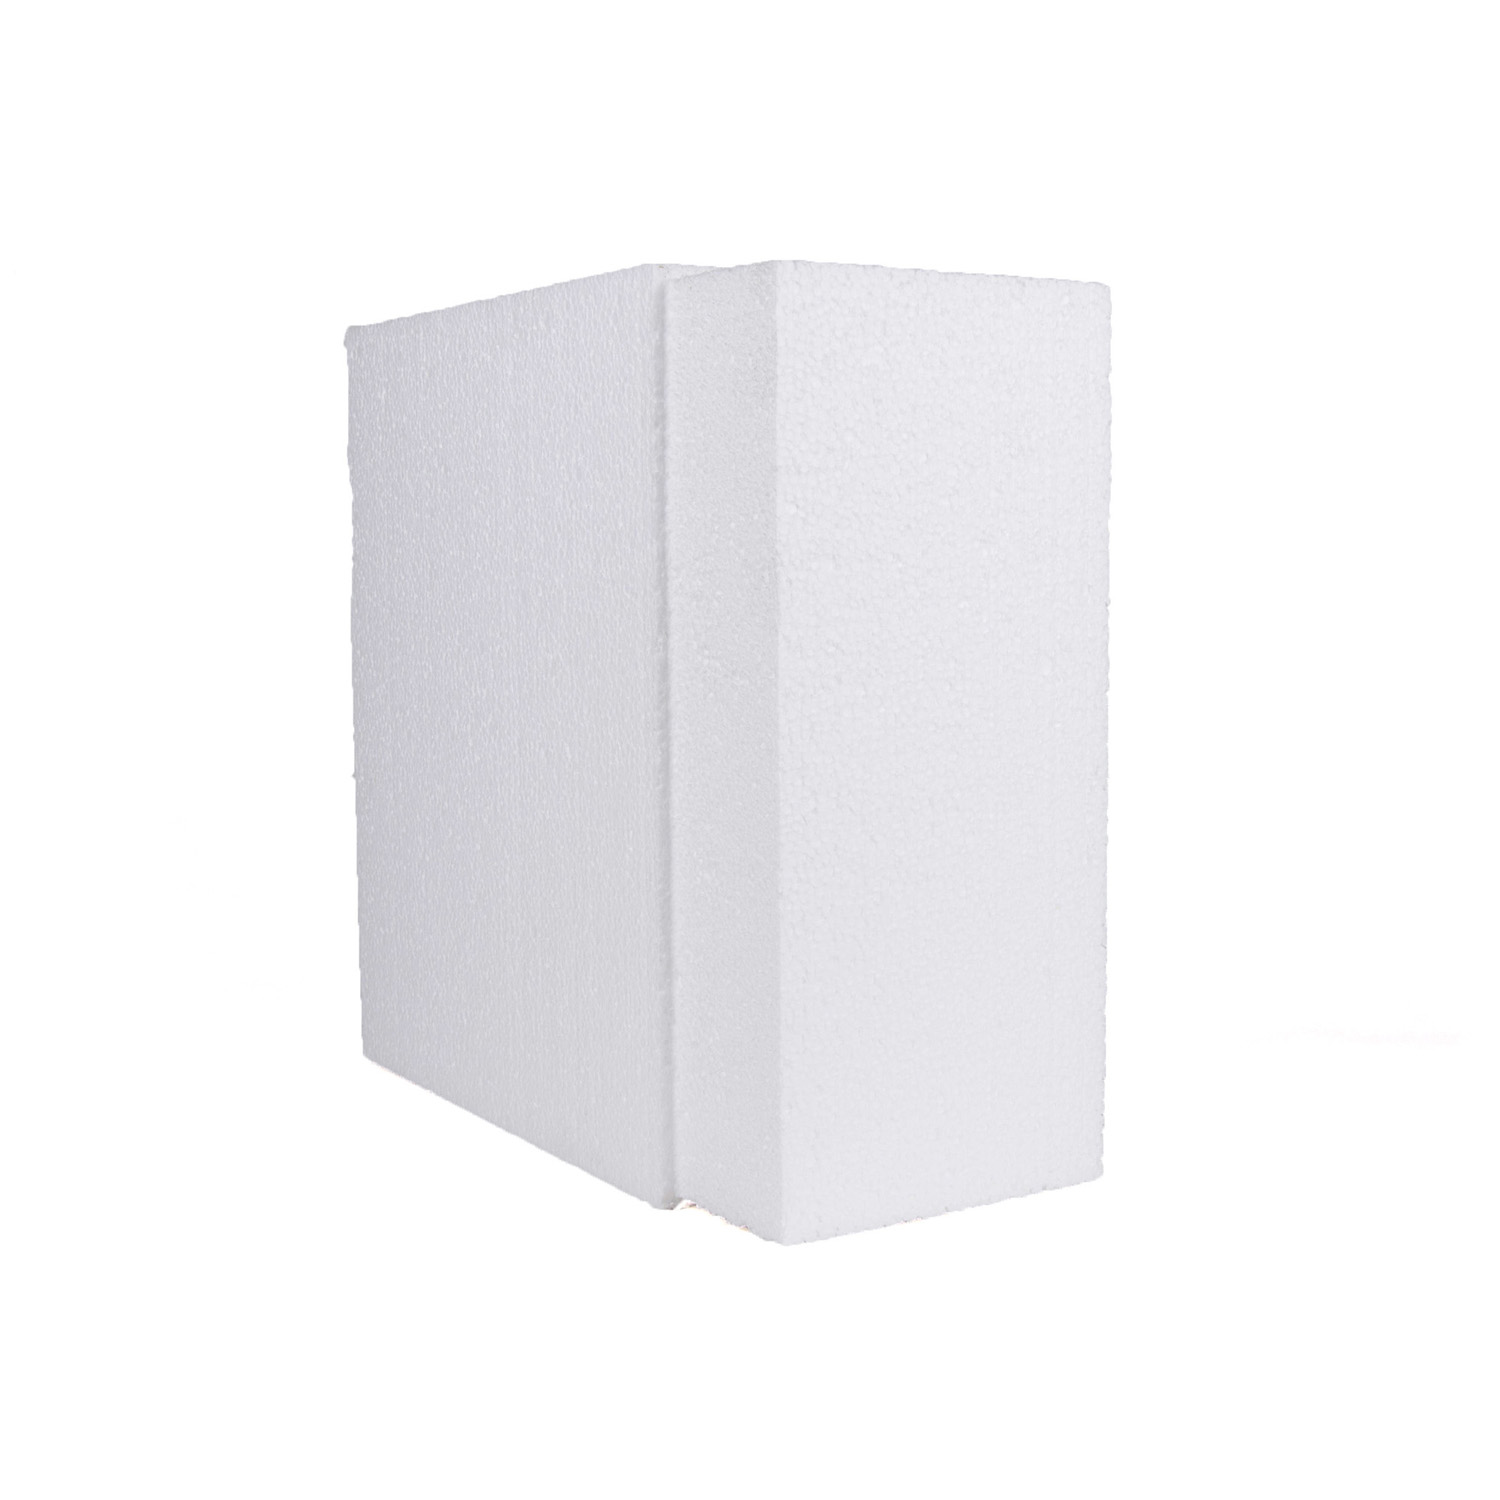 GF8 Casting form polystyrene for inner size 280x120mm